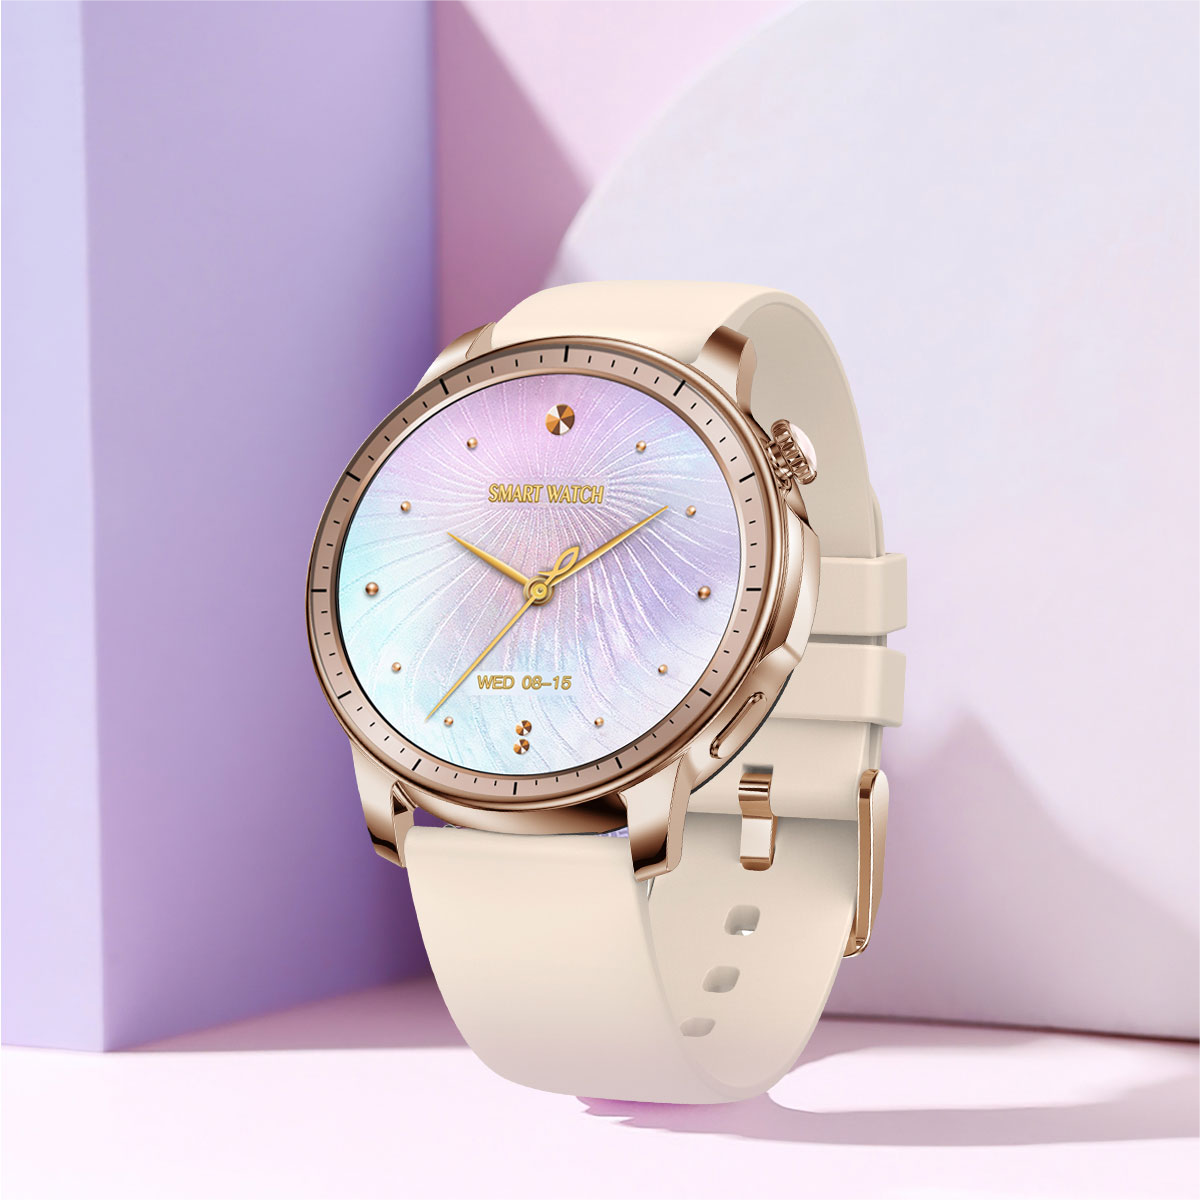 COLMI V65 Smartwatch 1,32″ AMOLED Display Fashion Unisex Smart Watch for Women